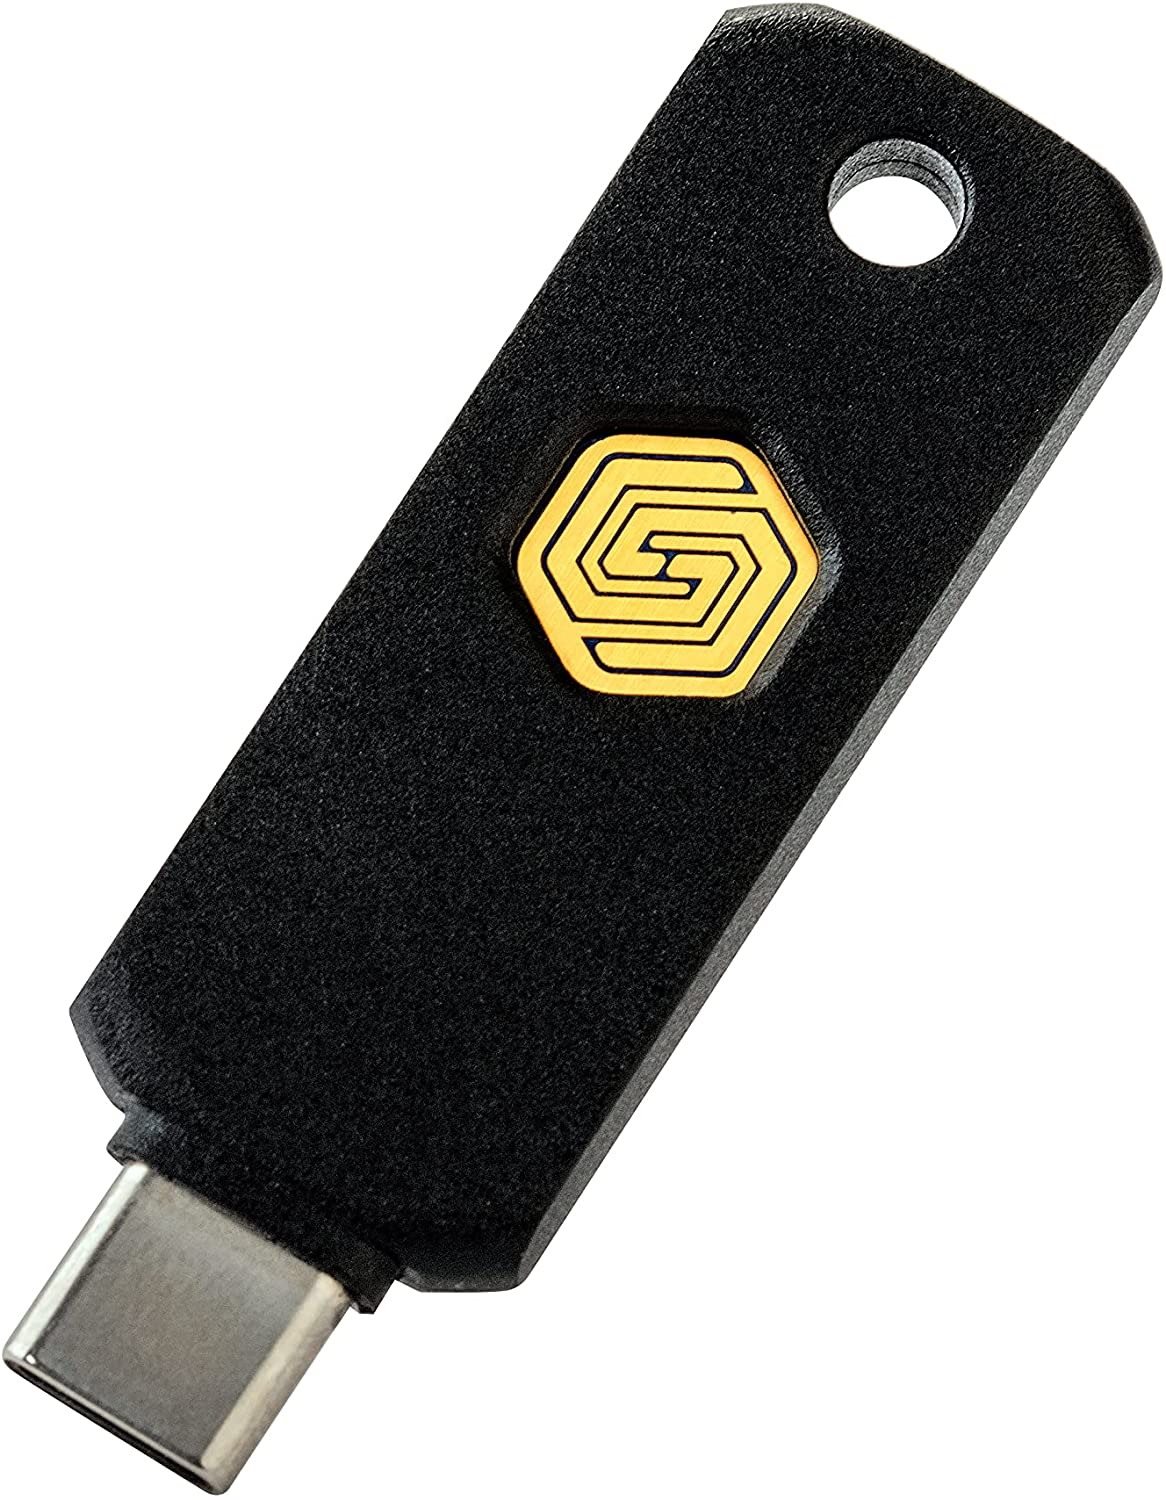 GoTrust Idem Key USB-C